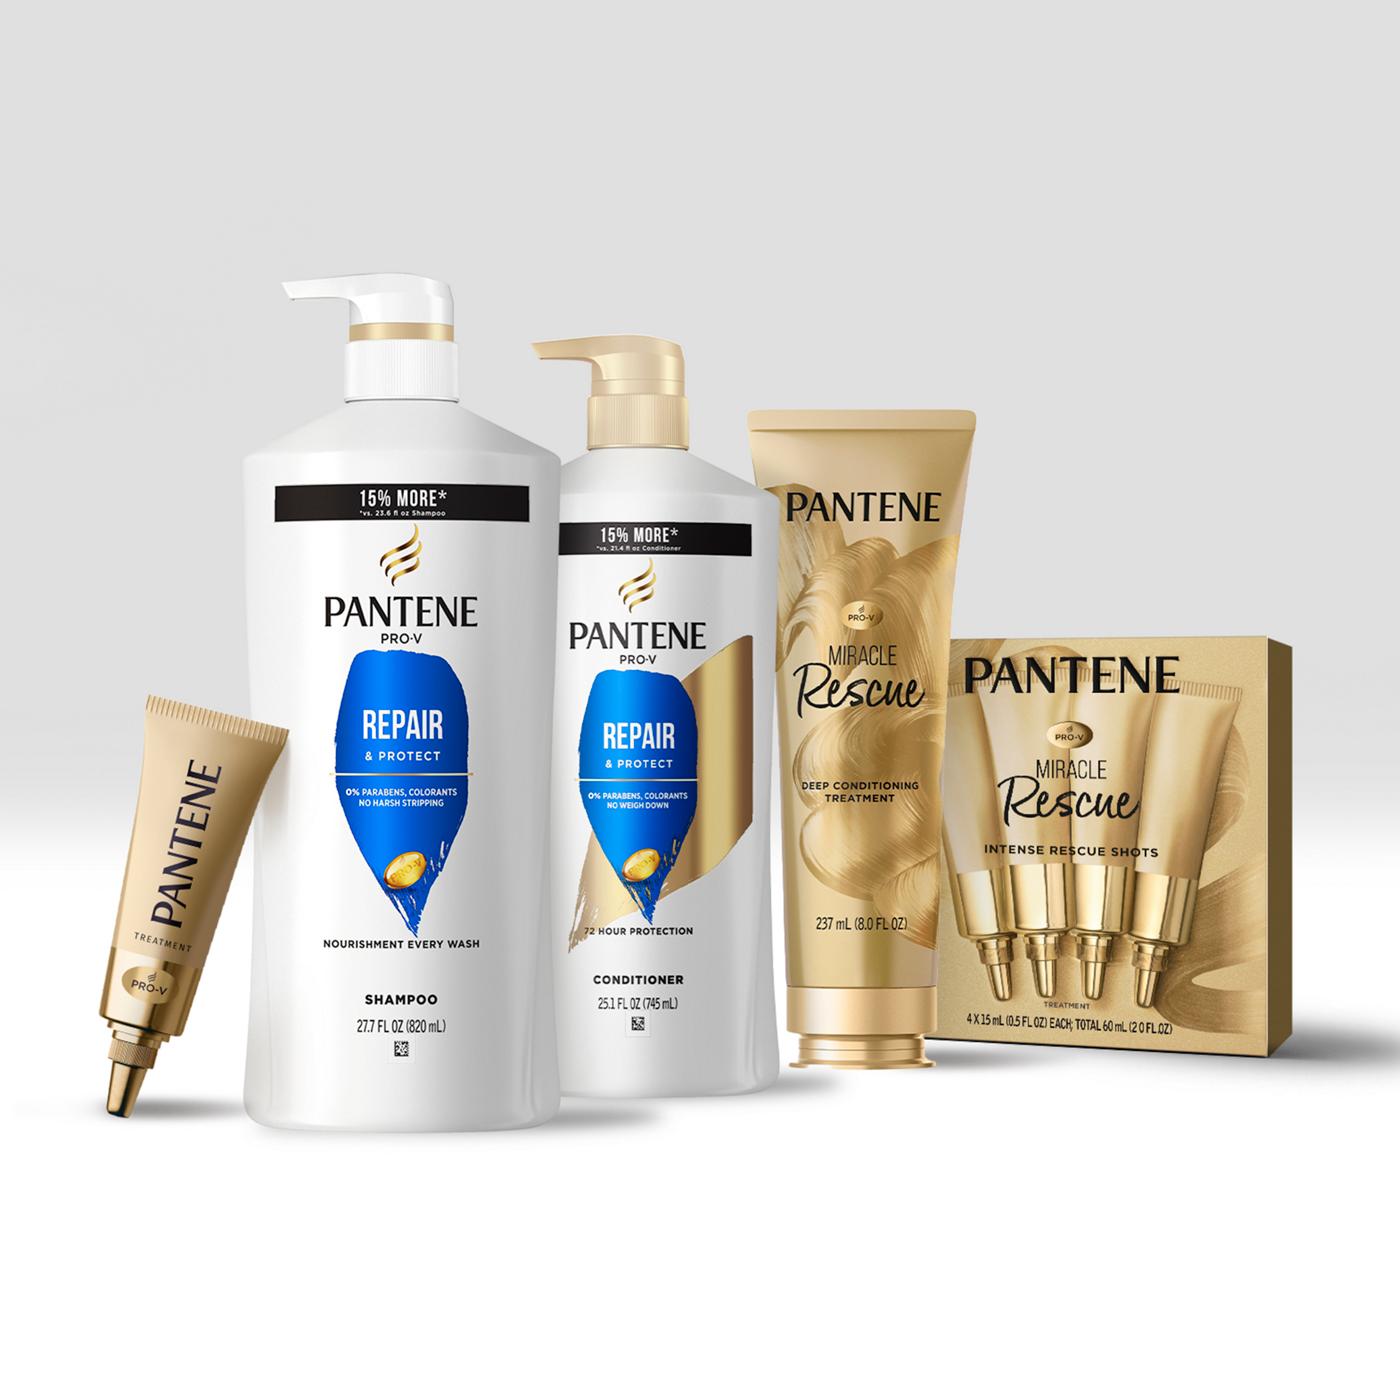 Pantene Pro-V Repair & Protect Shampoo; image 5 of 9